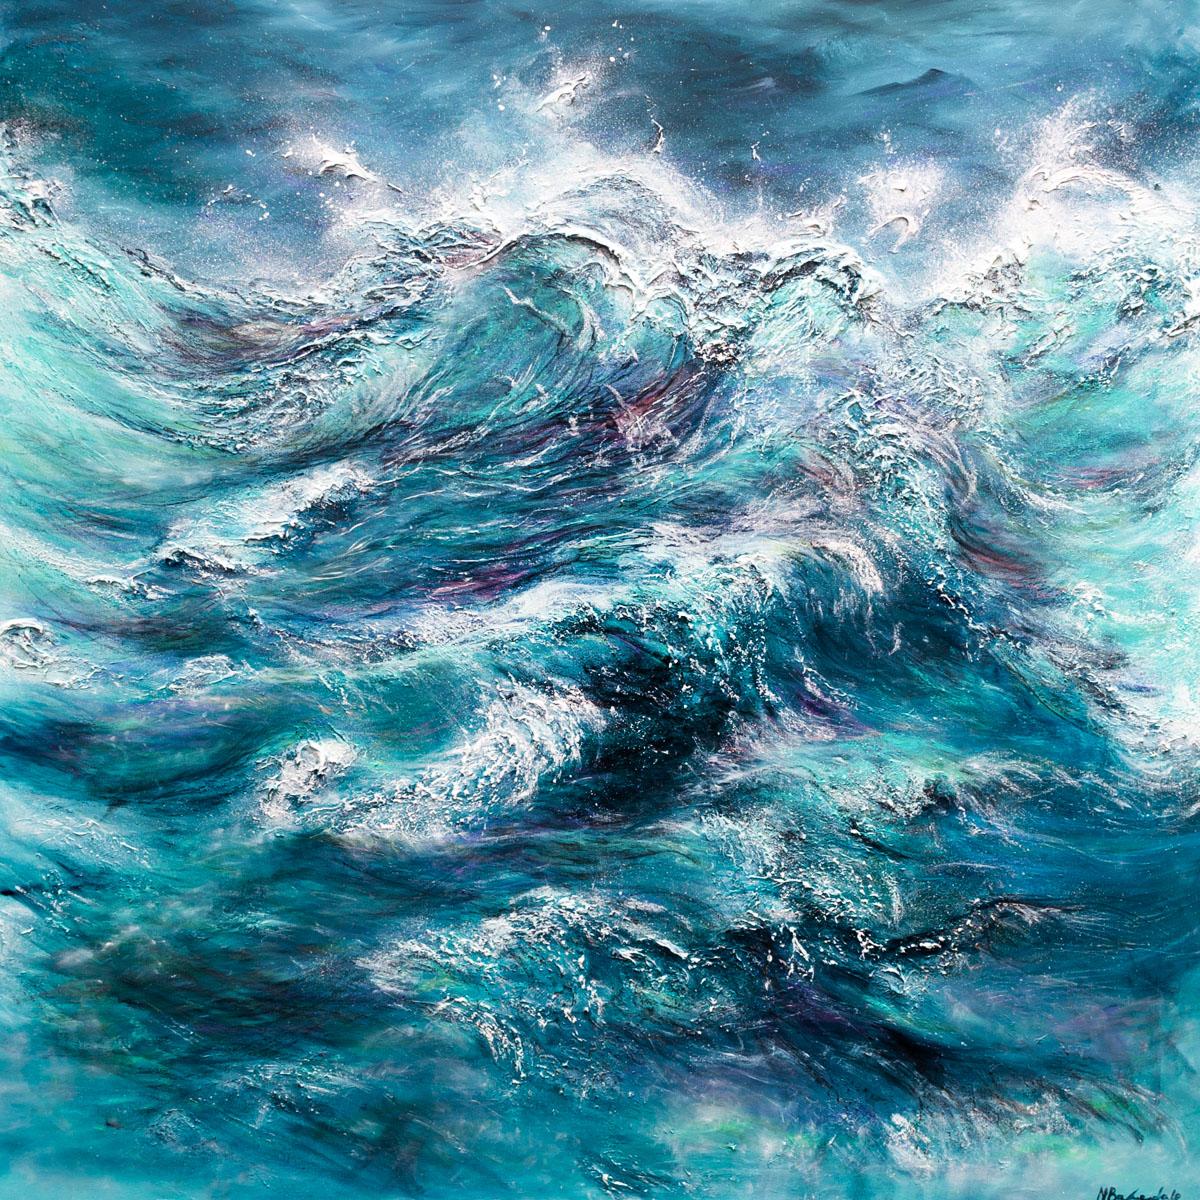 Wild Waters-original modern impressionsm seascape oil painting-contemporary Art